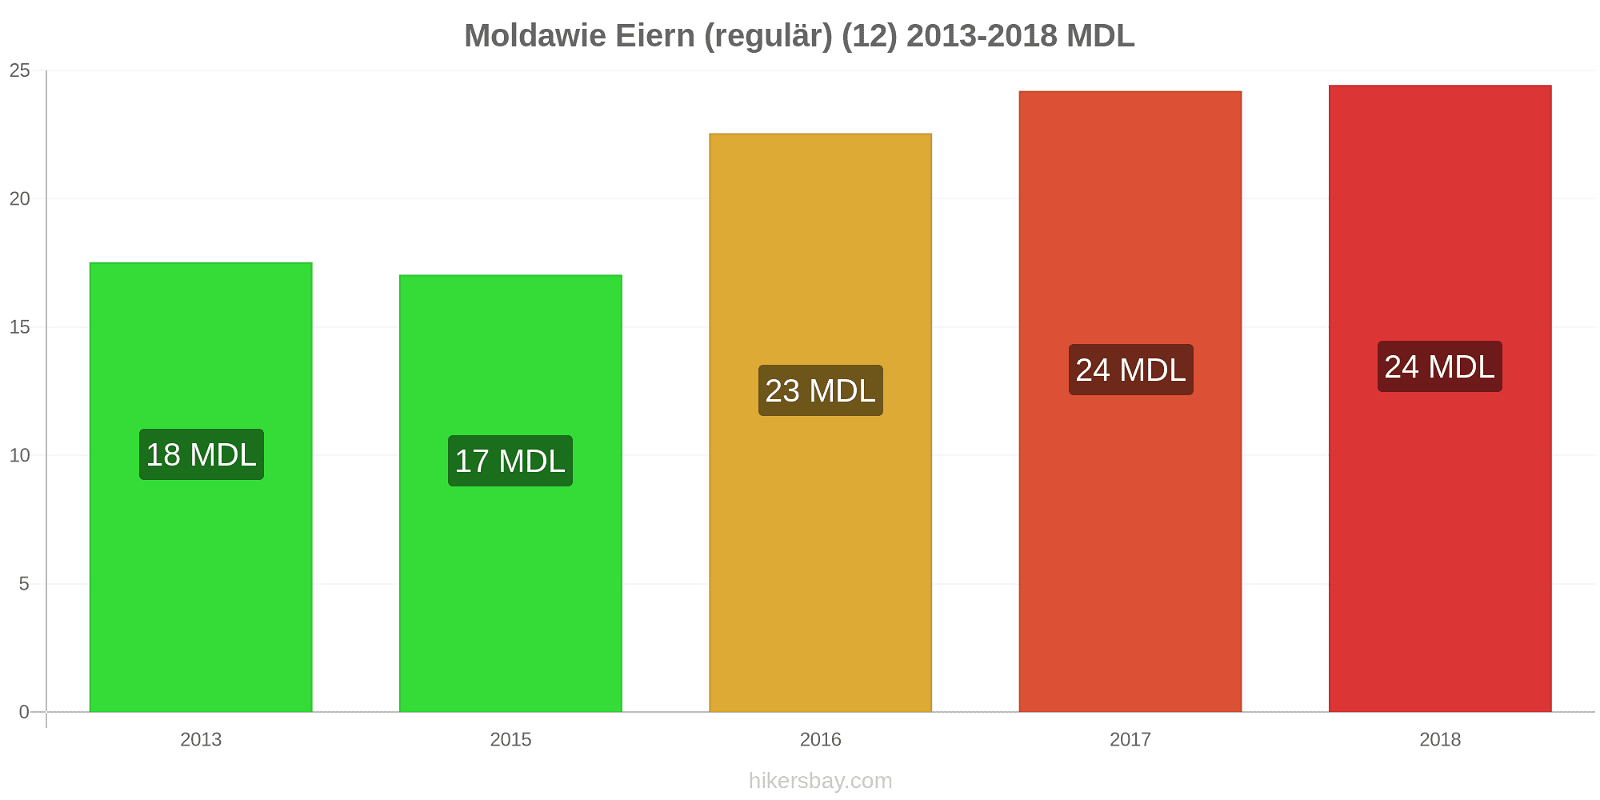 Moldawie Preisänderungen Eier (normal) (12 Stück) hikersbay.com